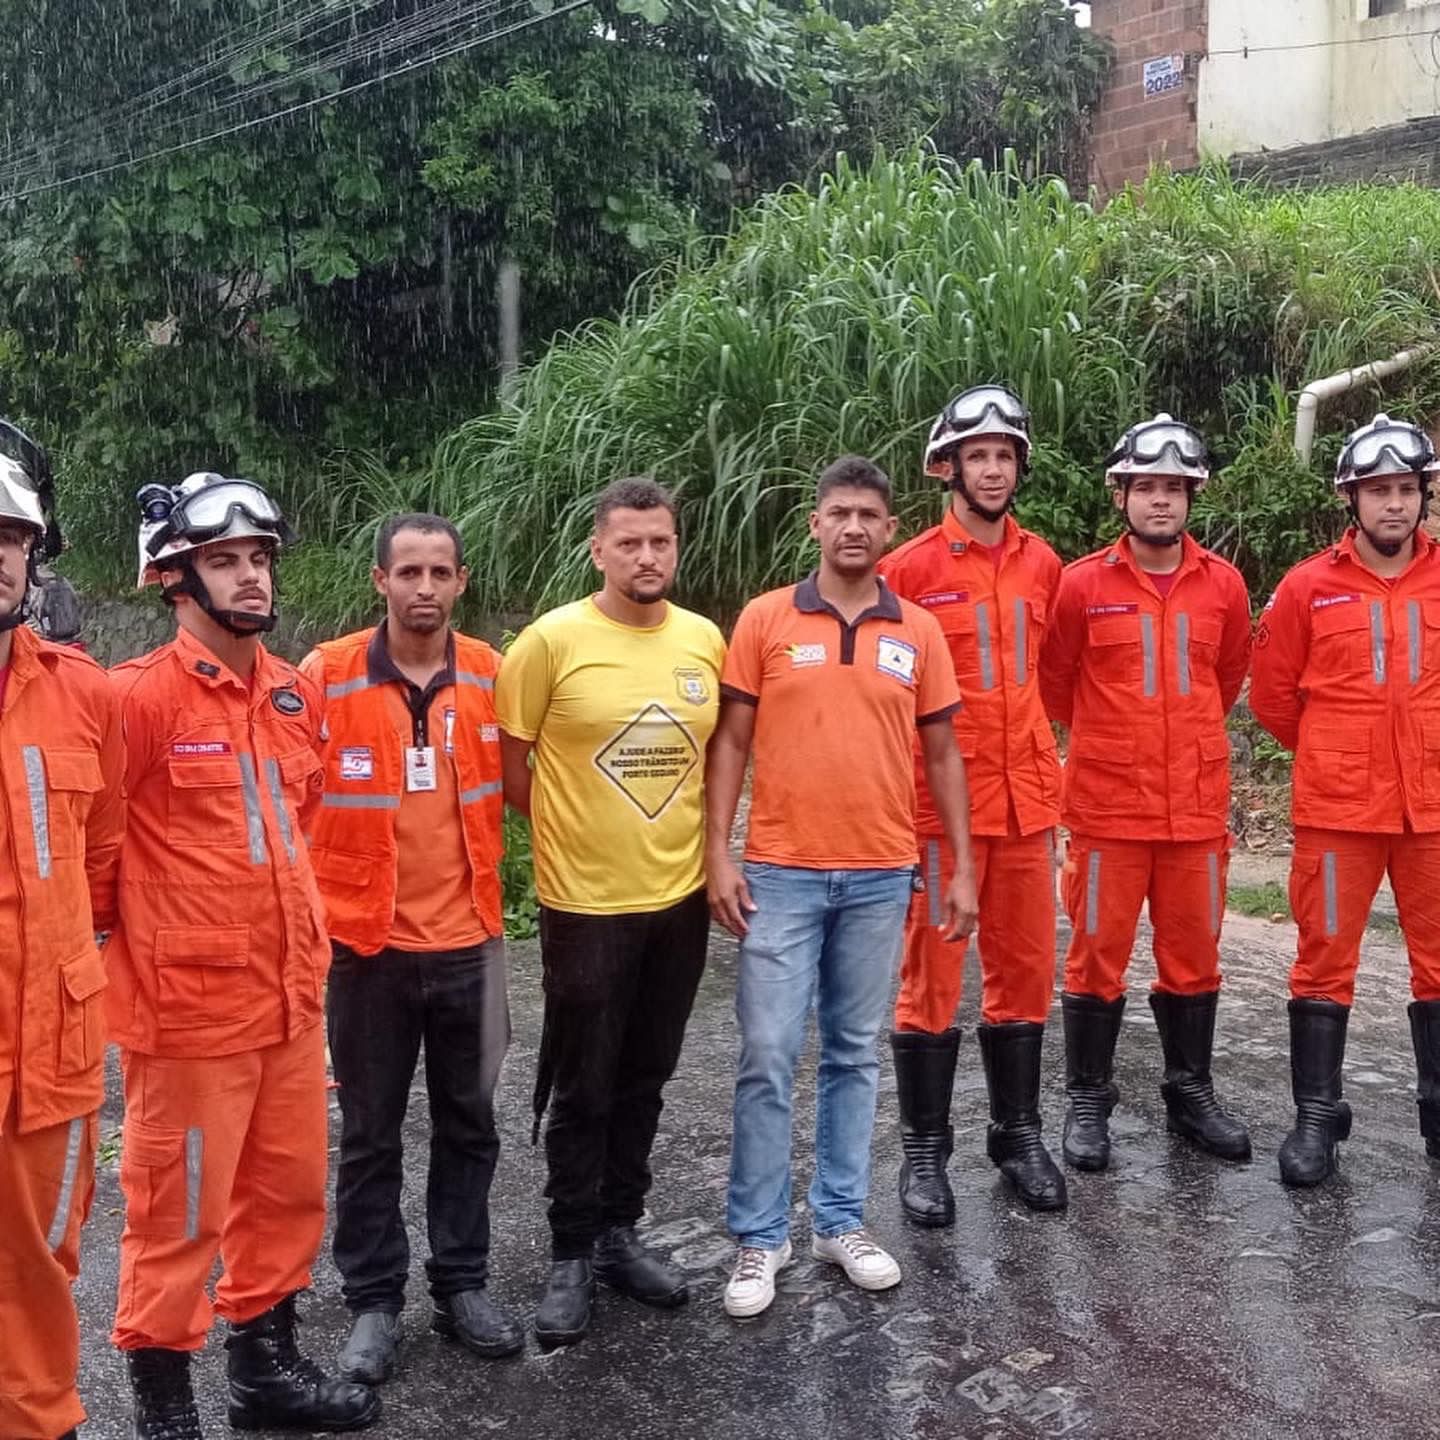 Prefeitura de Porto Seguro age rápido para minimizar os danos causados pela chuva 29